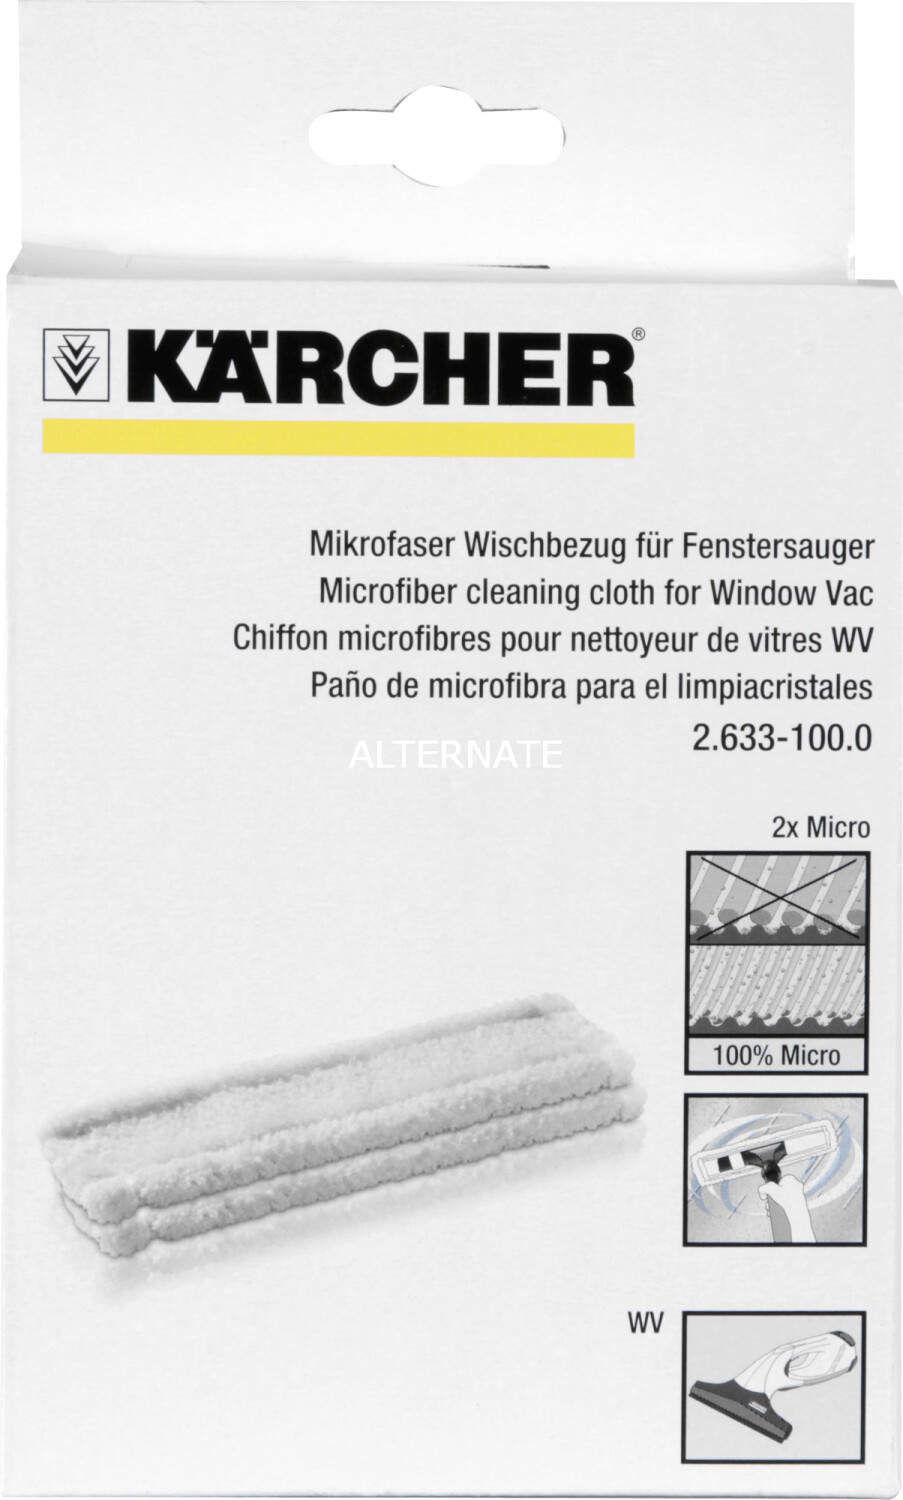 Karcher 2.633-100.0 desde 8,92 €